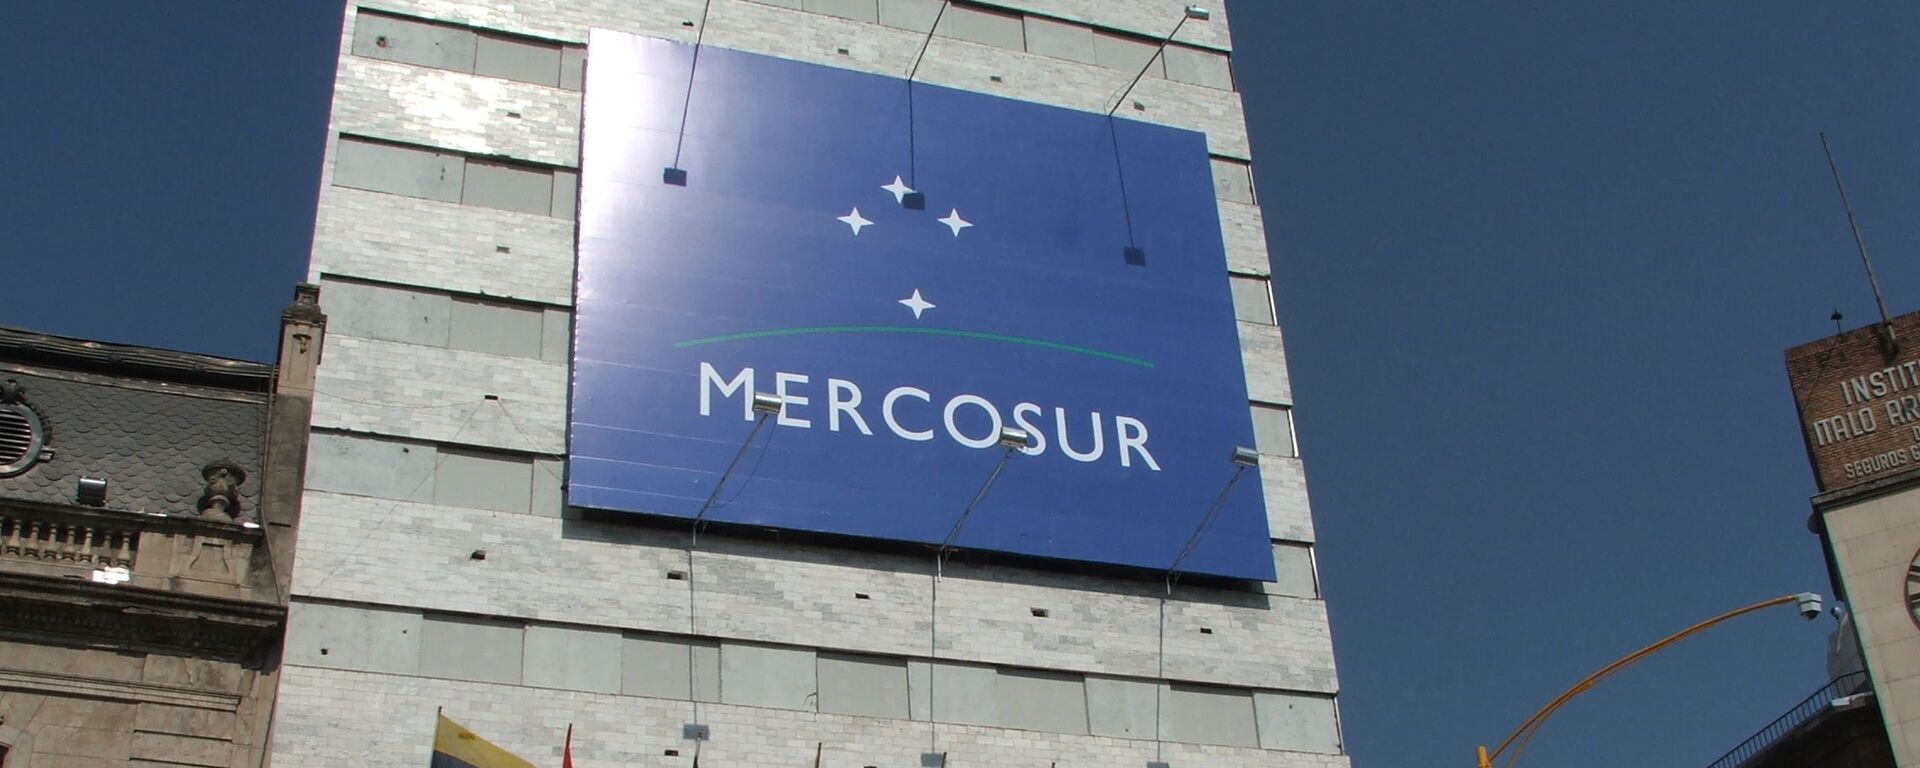 Sede de Mercosur - Sputnik Mundo, 1920, 15.12.2020